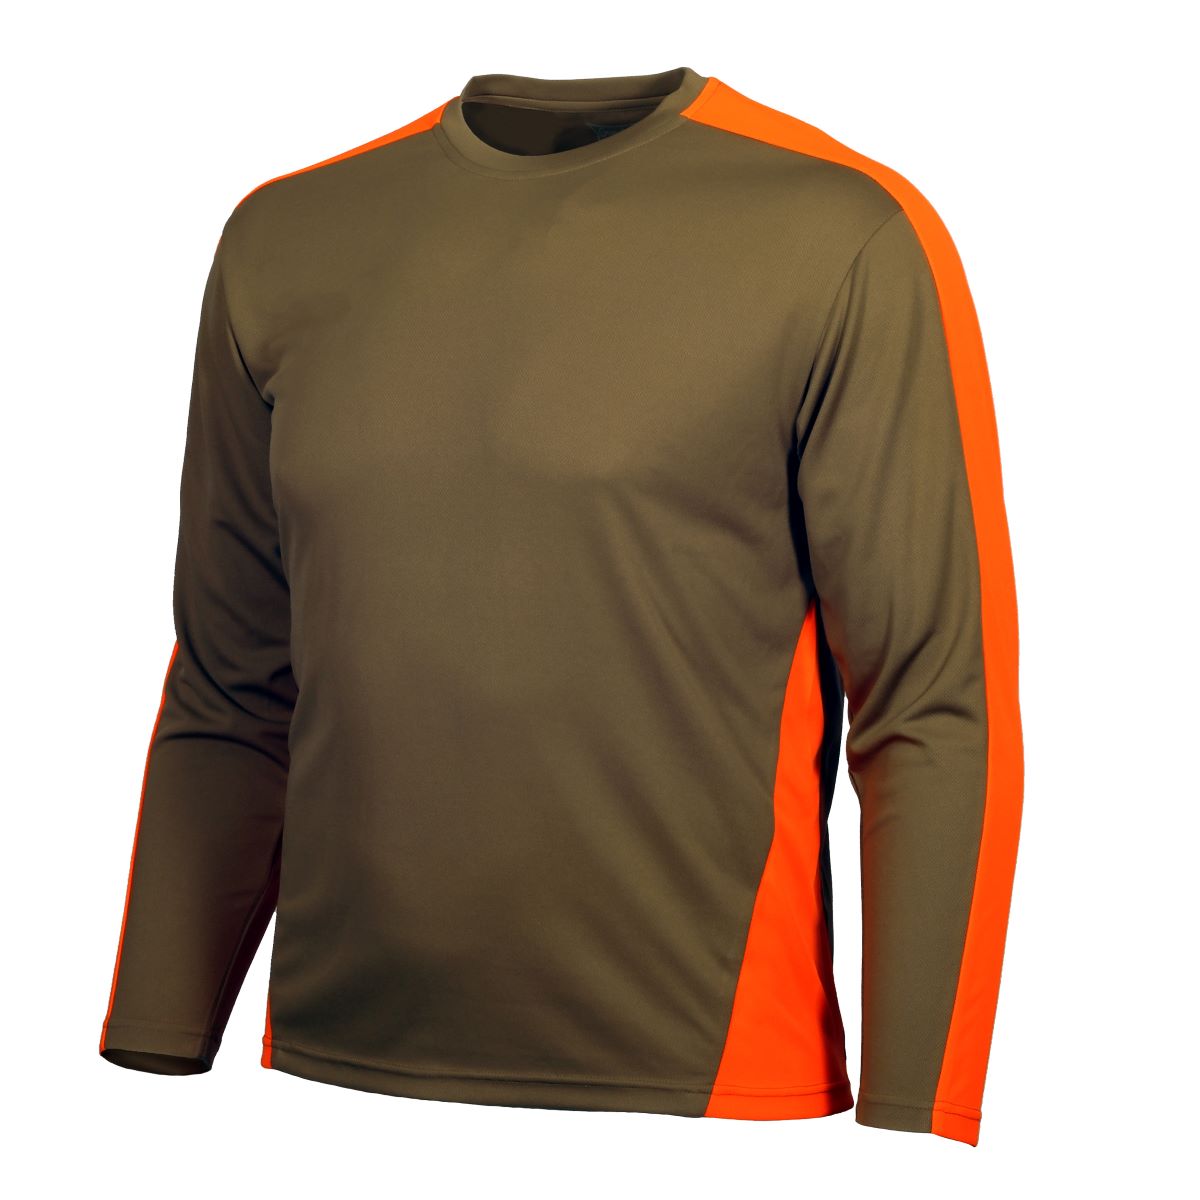 'Gamehide' Men's High Performance T-Shirt - Tan / Orange